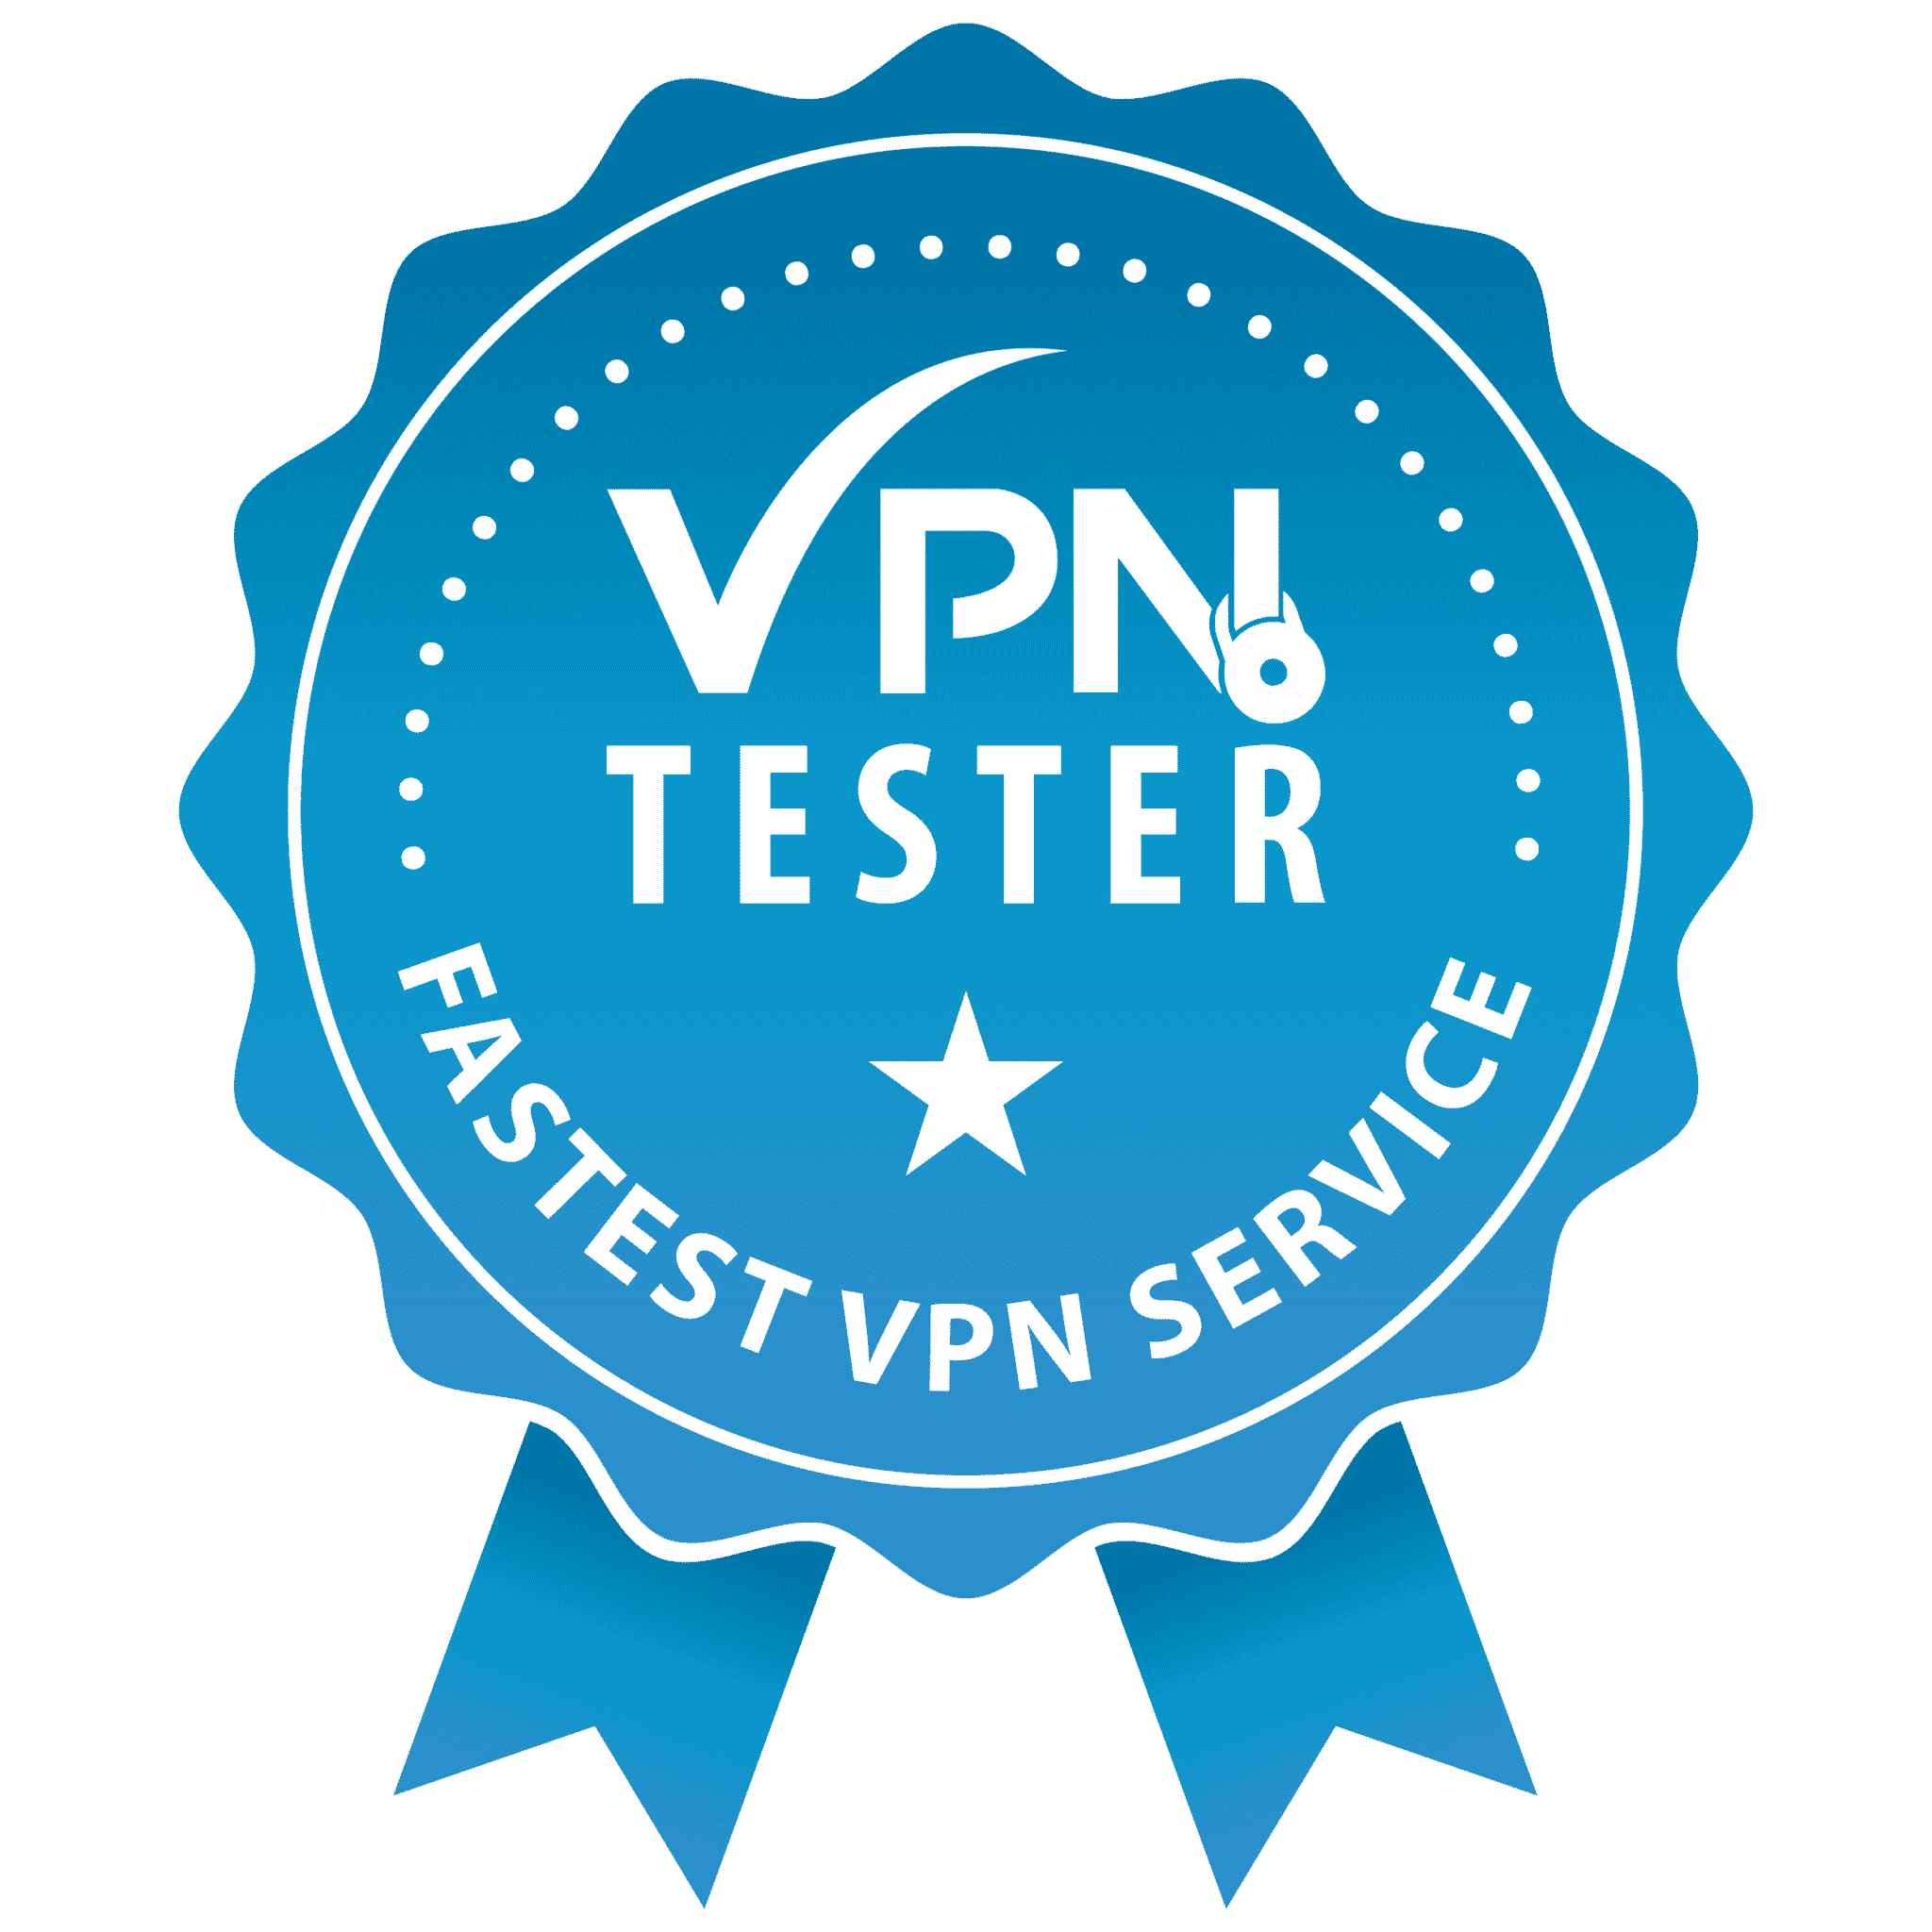 Fastest VPN in test